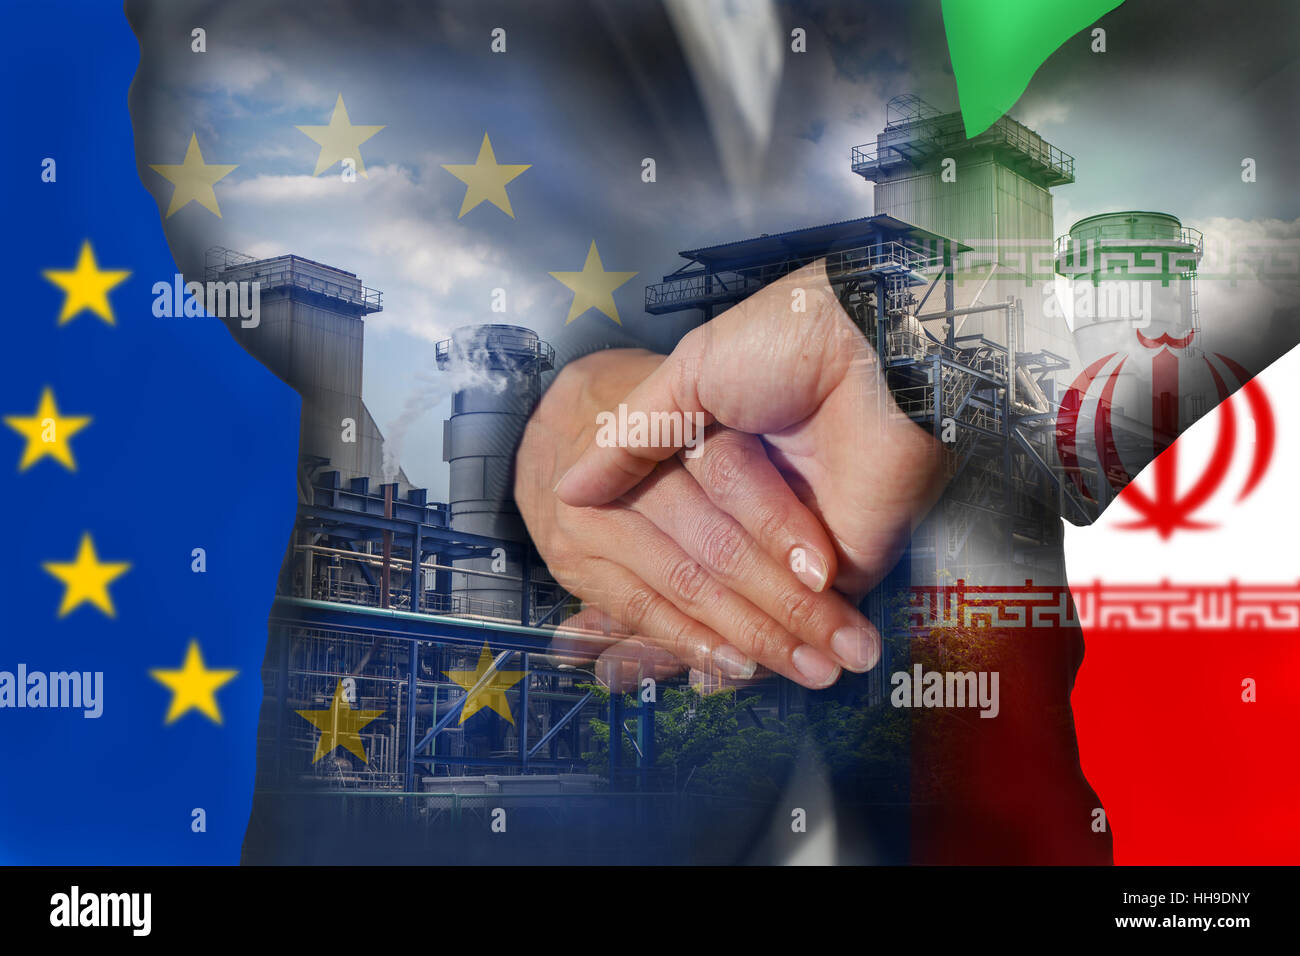 Double exposure of handshake, Power Reactor, flag of European Union and flag of Iran Stock Photo